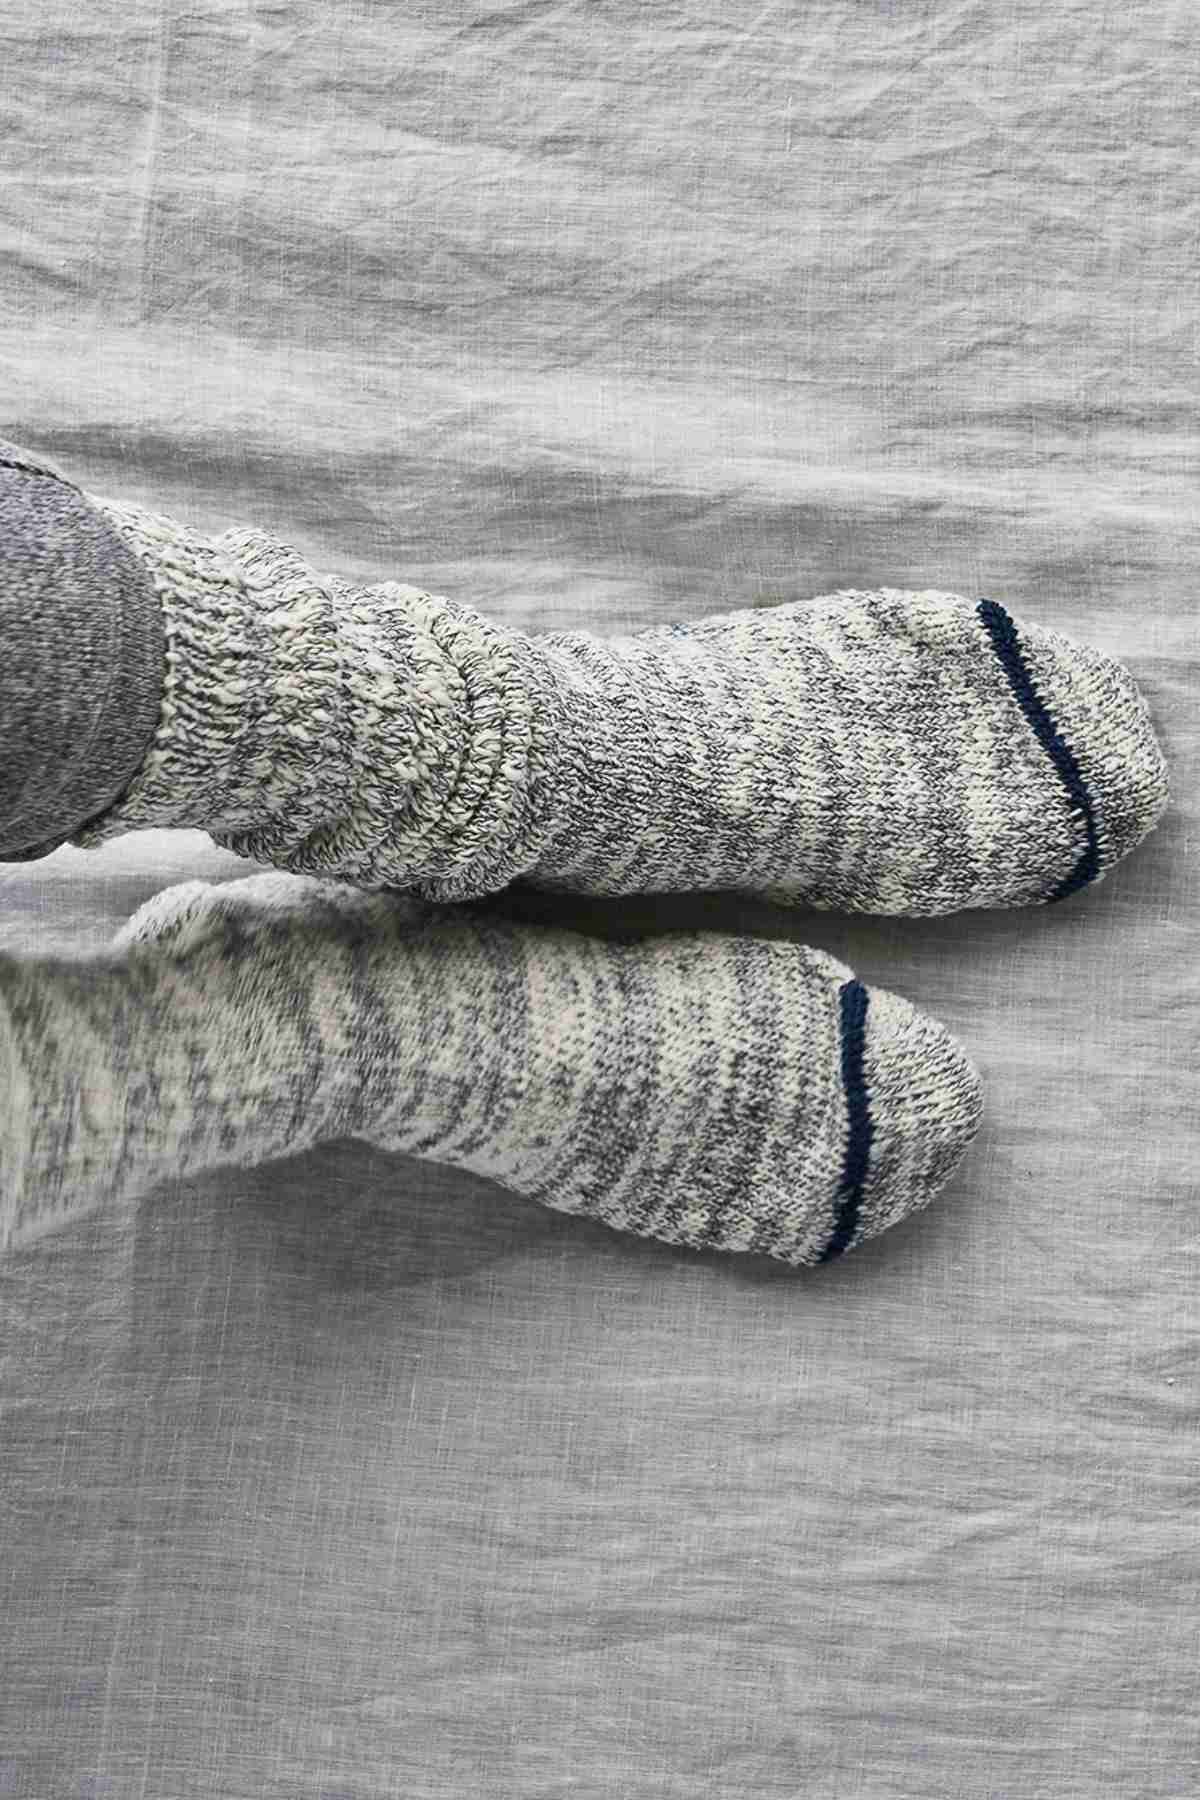 Garabou Indigo Blue socks on gray background 1 pair on feet